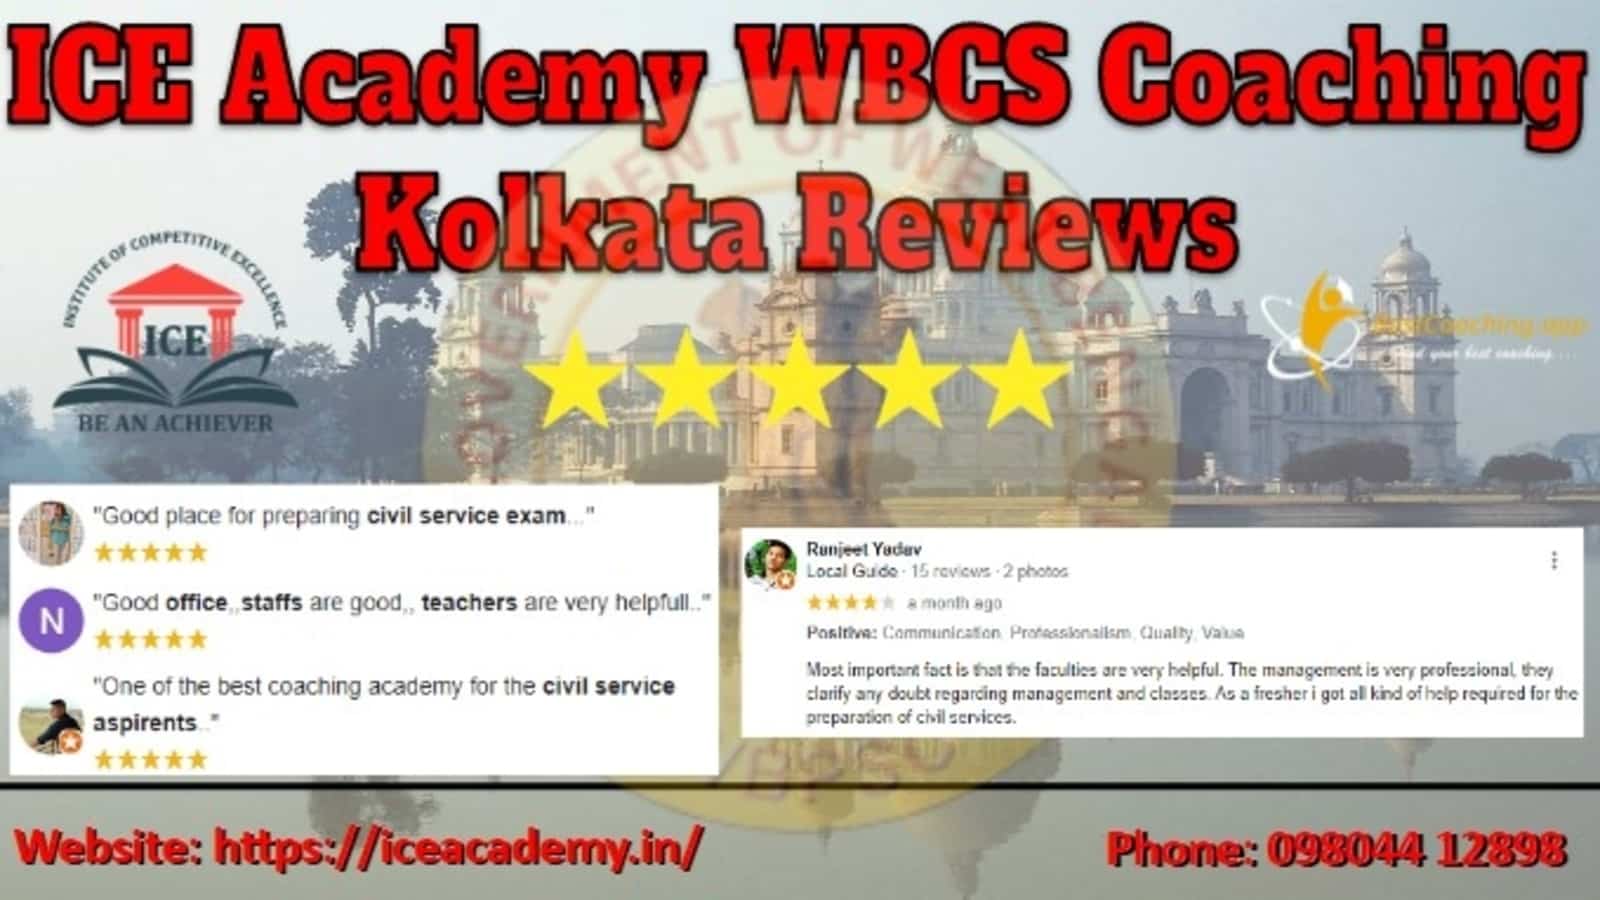 ICE Academy WBCS Coaching Kolkata Review